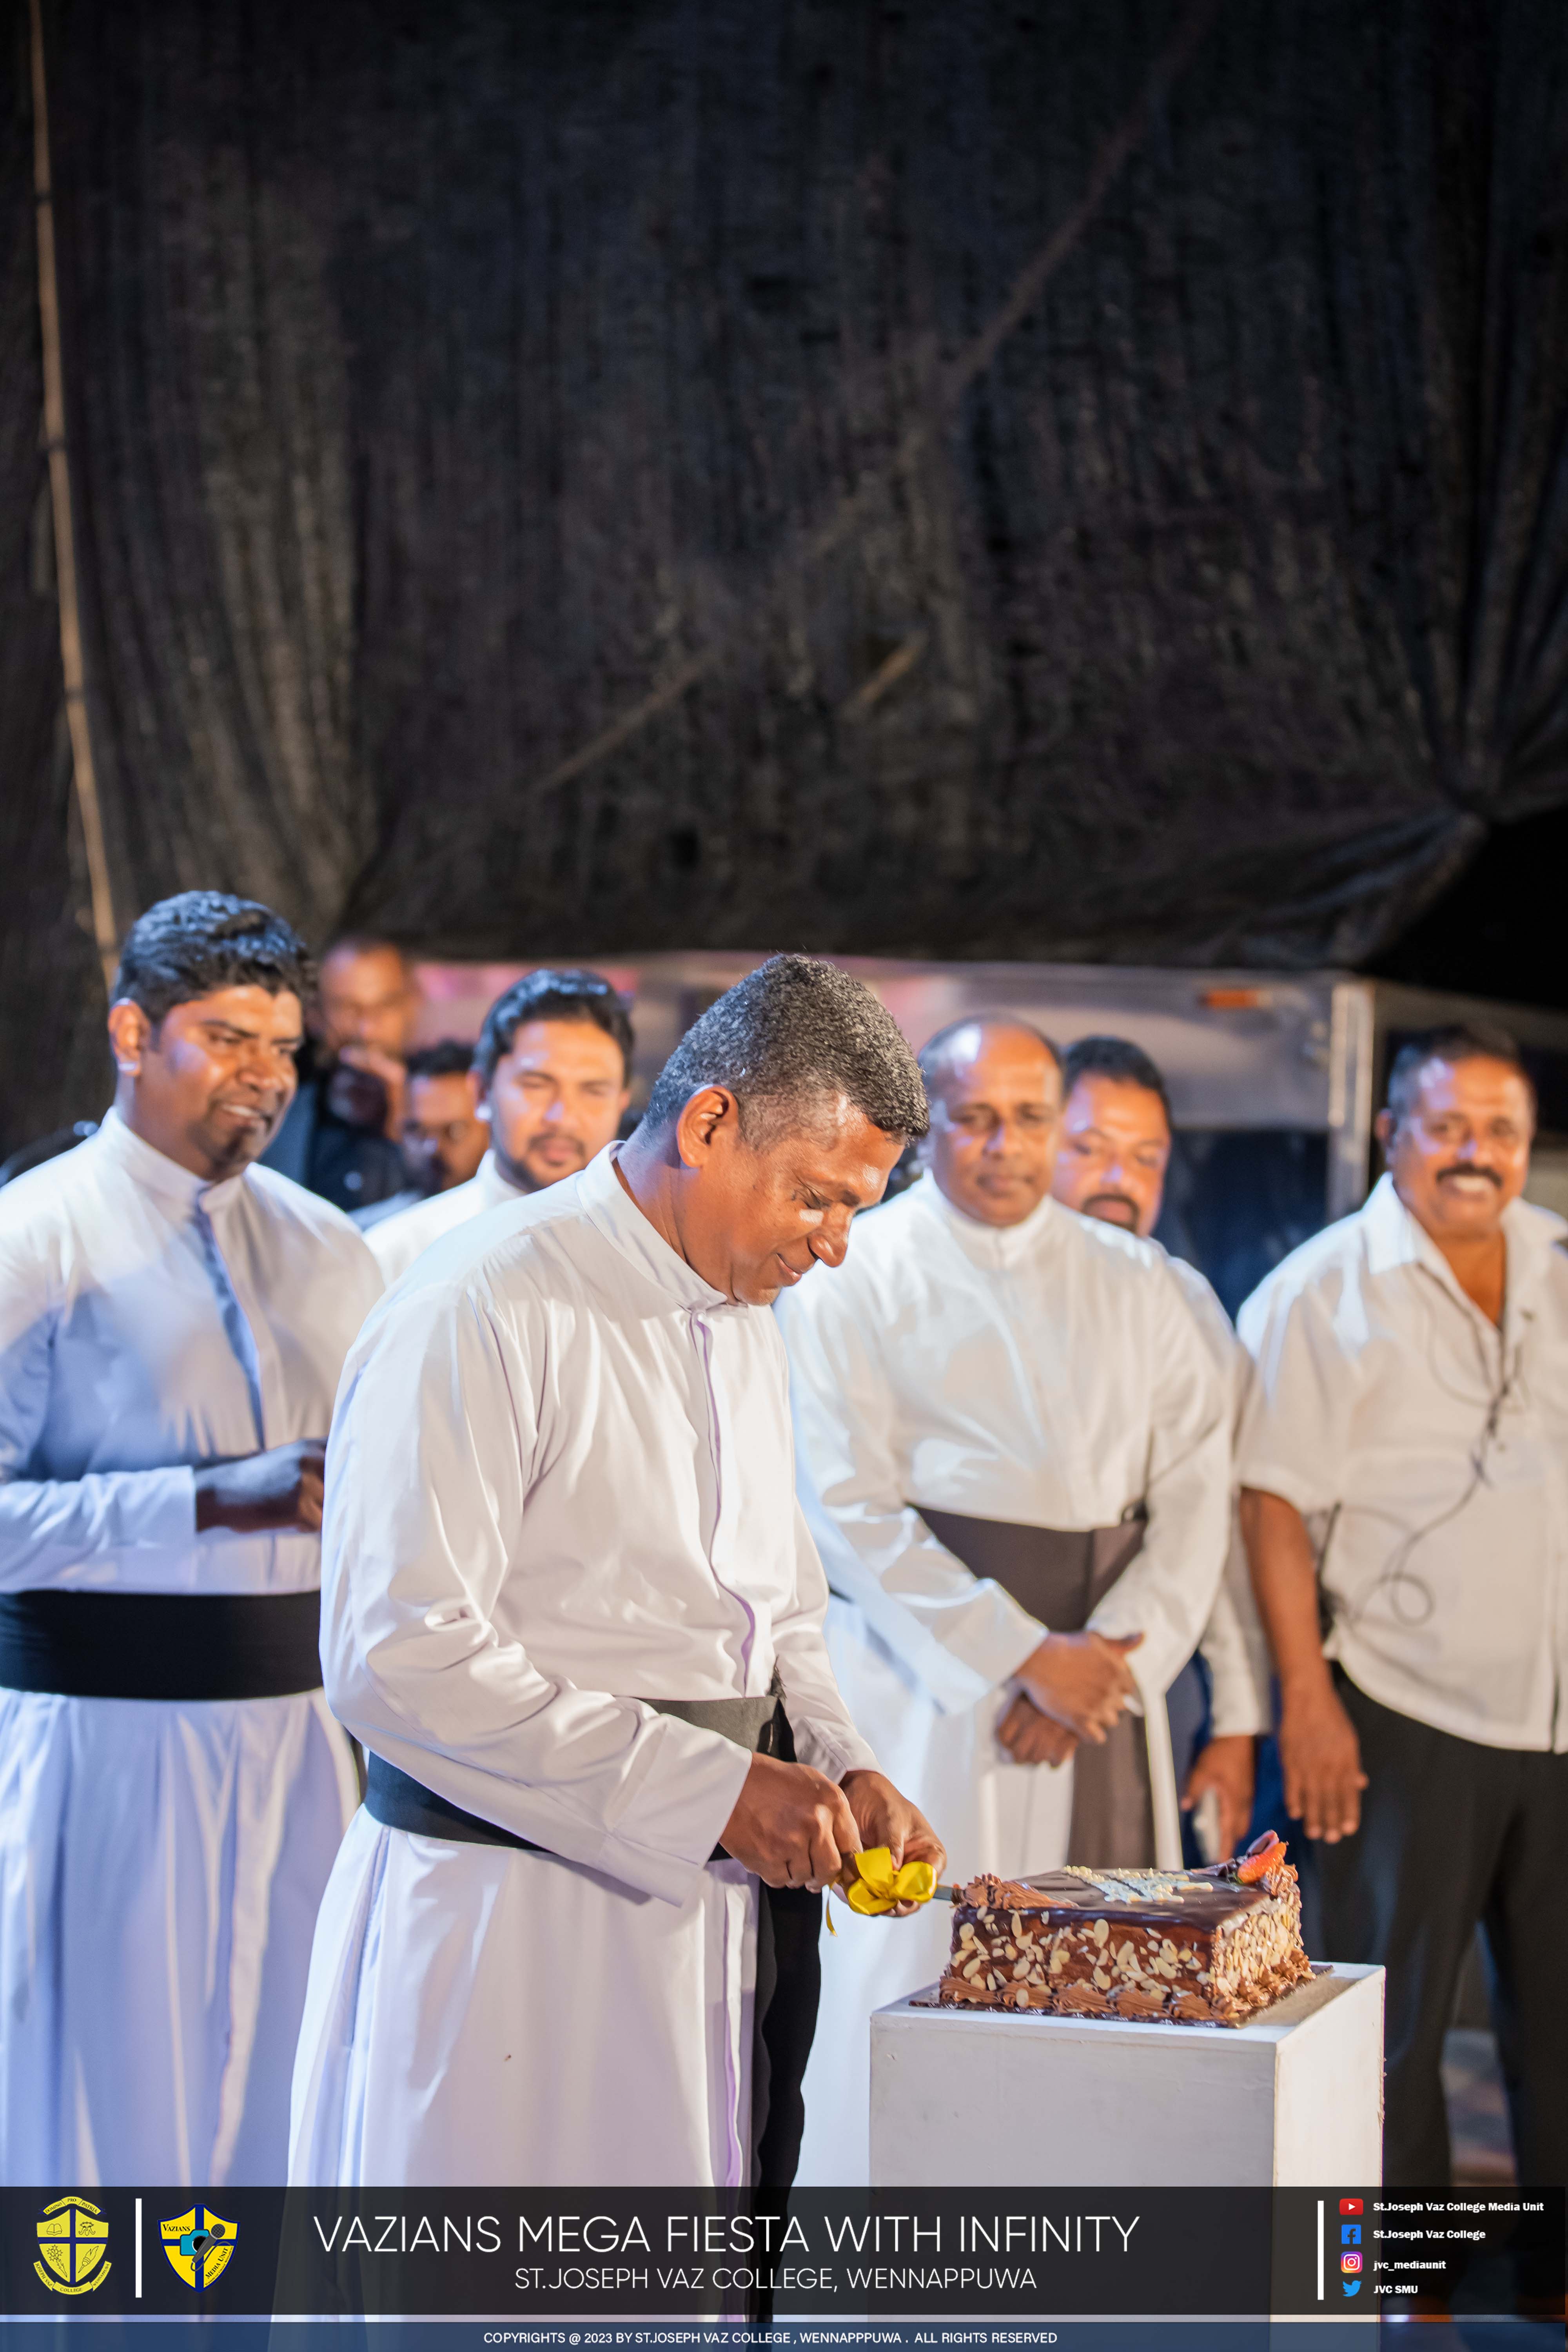 Vazians Mega Fiesta With Infinity - St. Joseph Vaz College - Wennappuwa - Sri Lanka